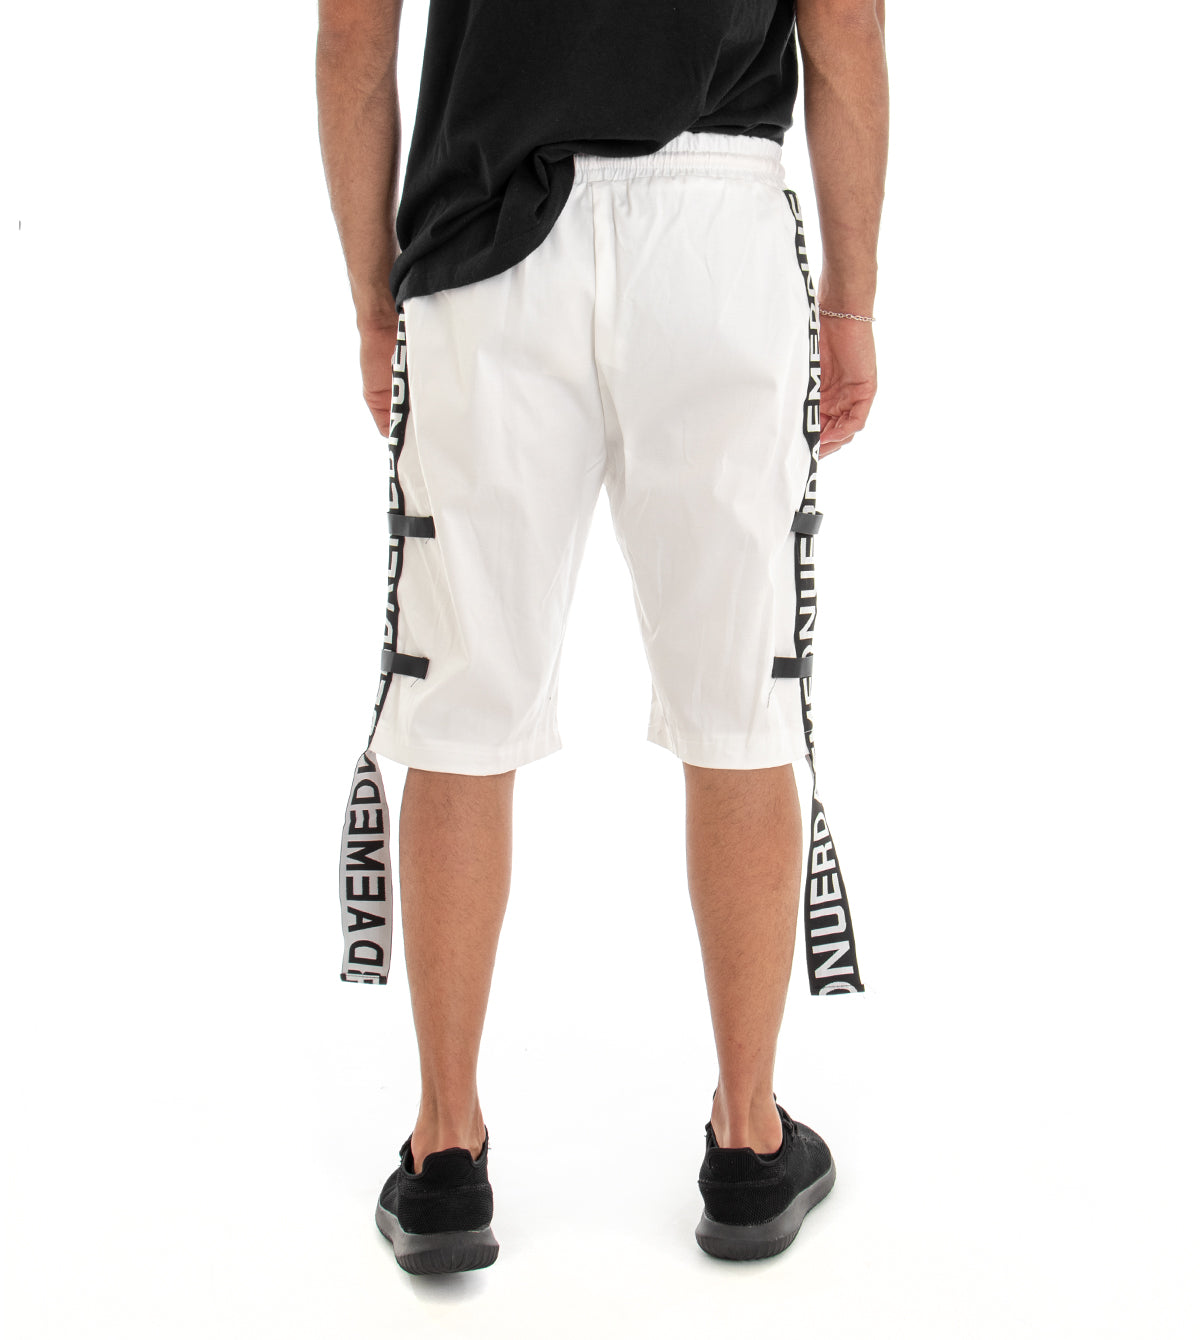 Bermuda Pantaloncino Uomo Shorts Tuta Bianco Fasce Laterali GIOSAL-PC1552A